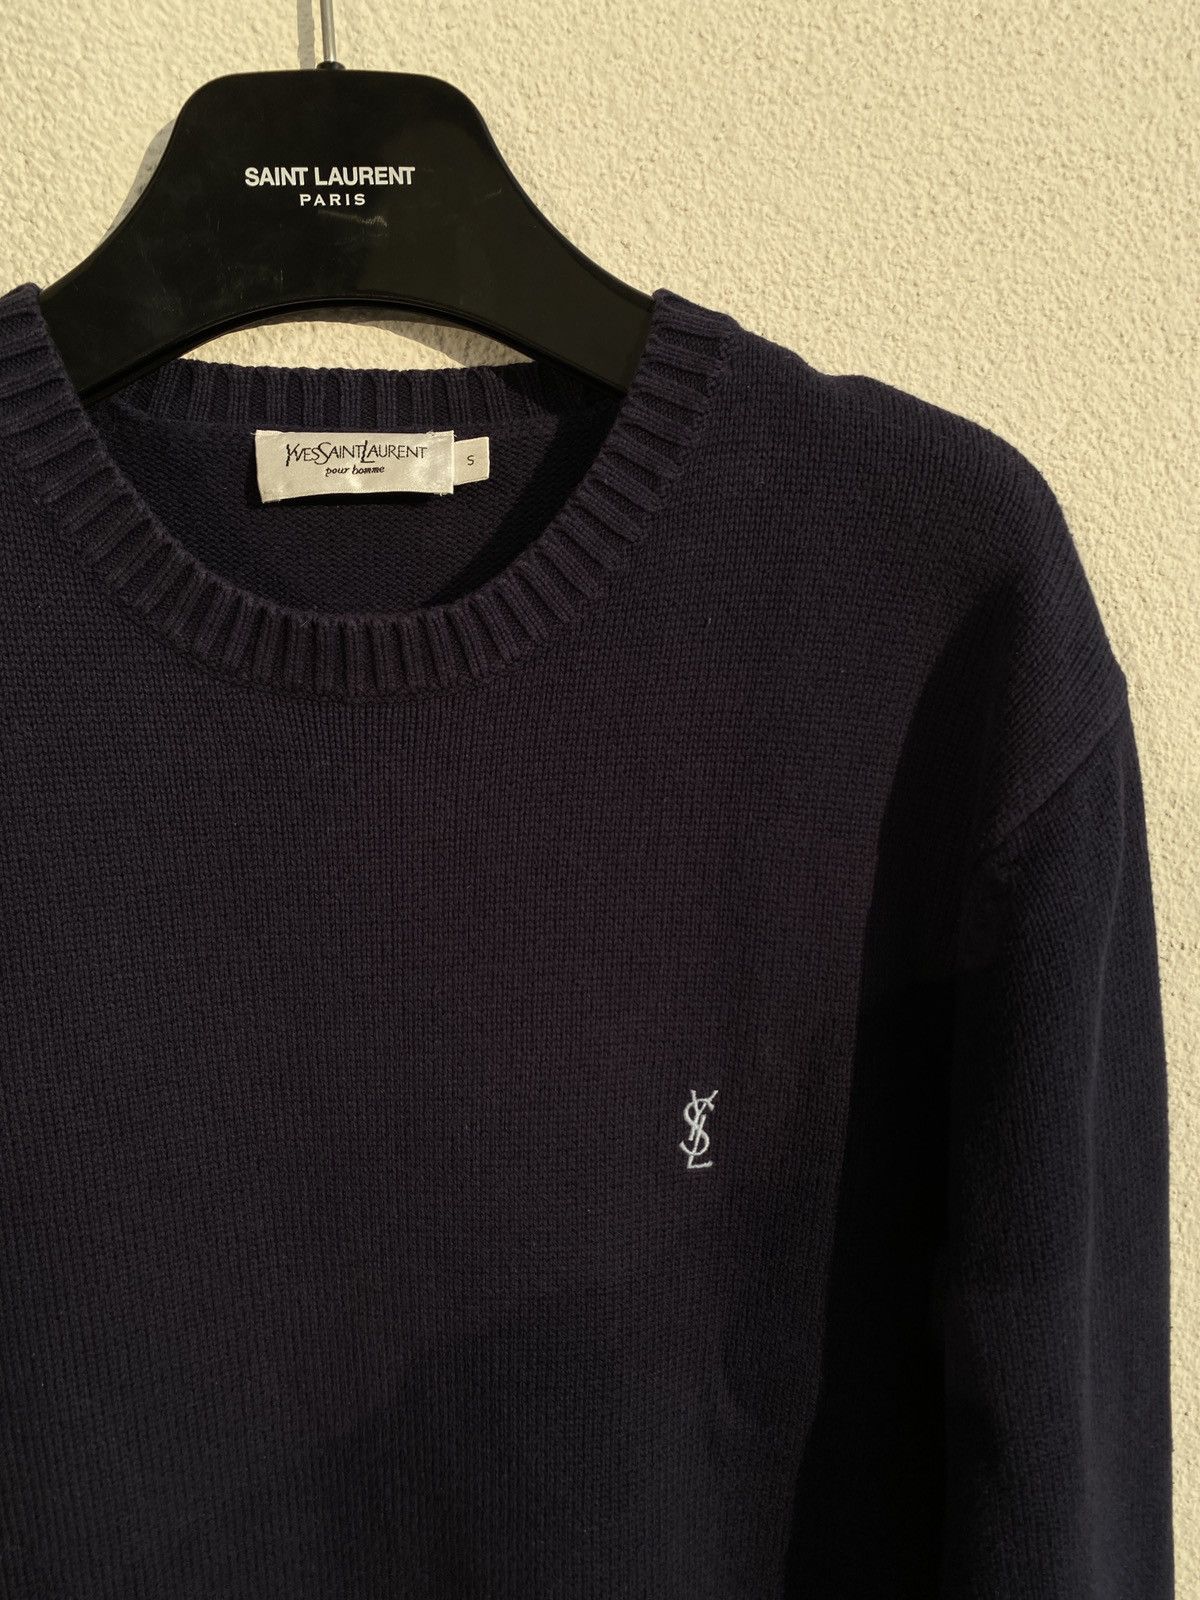 Yves Saint Laurent YSL Sweater Knit | Grailed